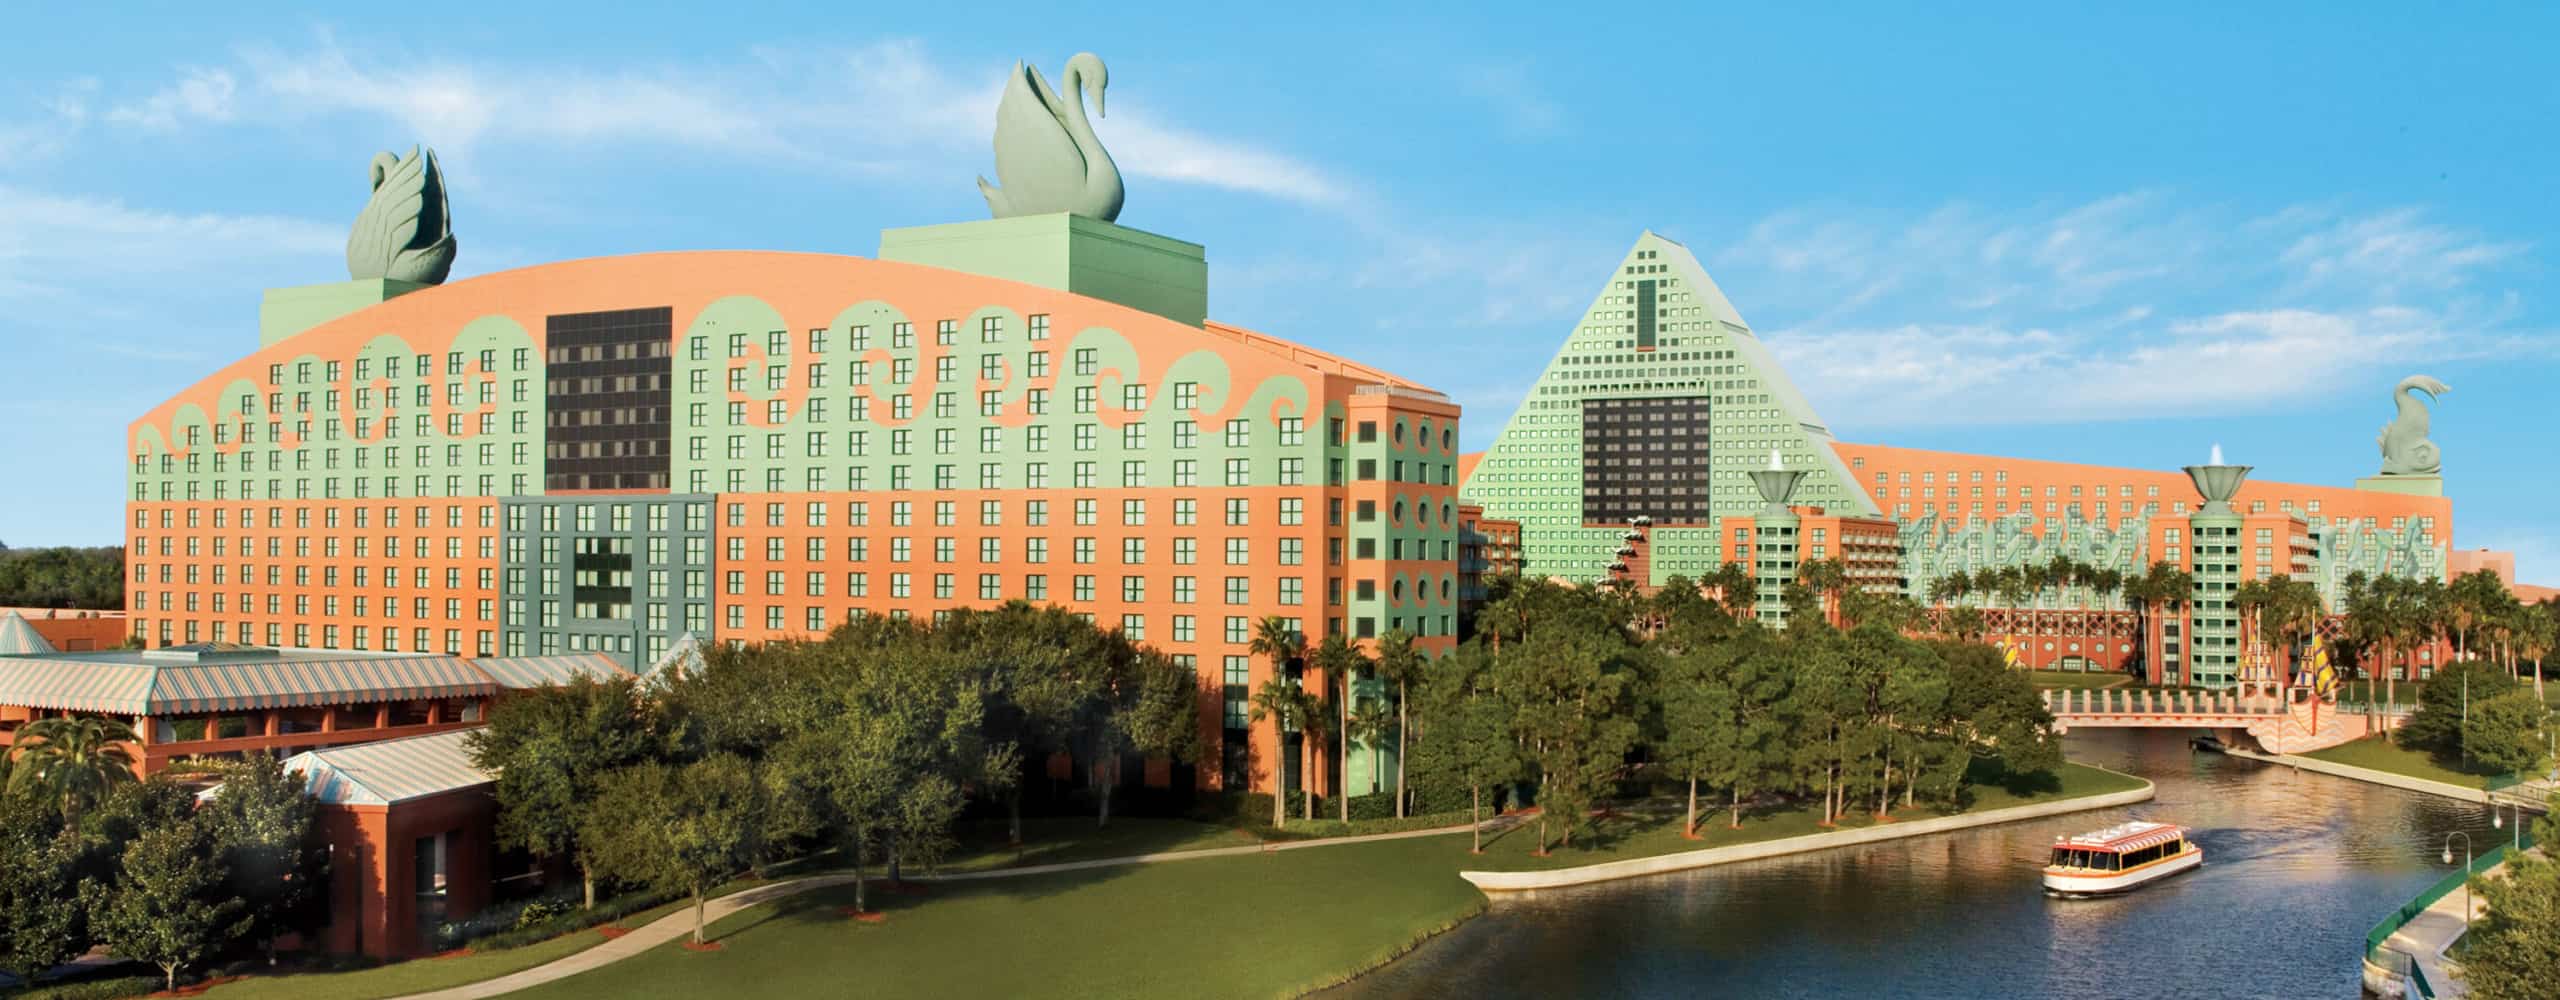 Walt Disney World Swan And Dolphin Resort, Florida